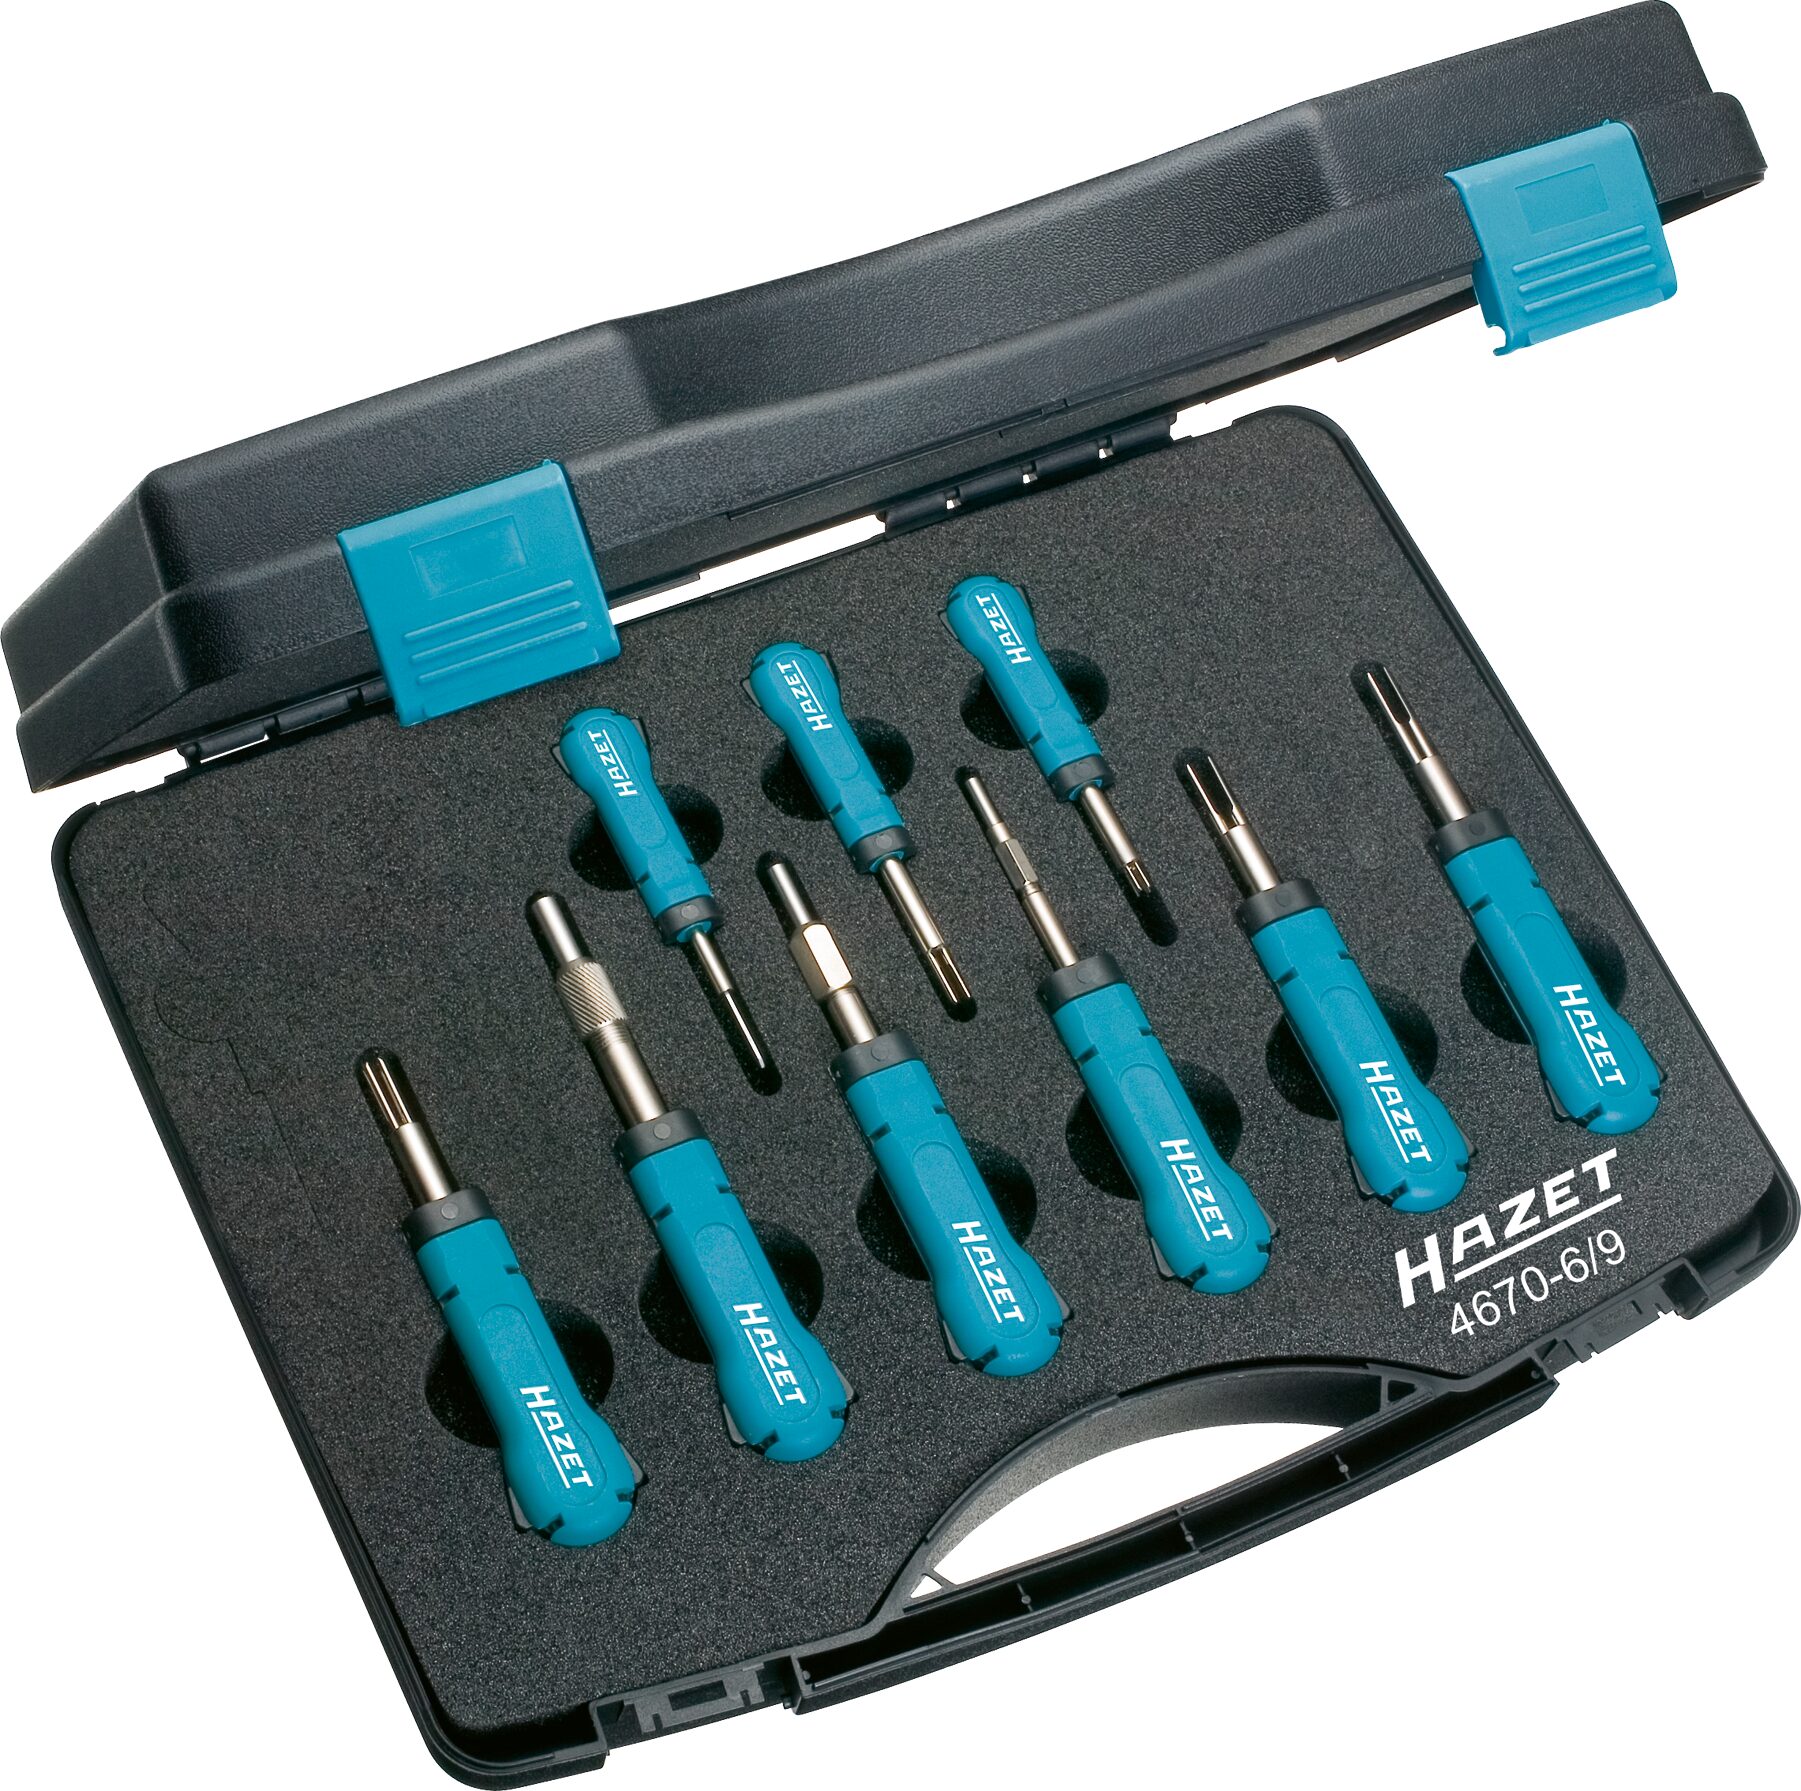 HAZET Kabelentriegeler Sortiment 4670-6/9 · Anzahl Werkzeuge: 9